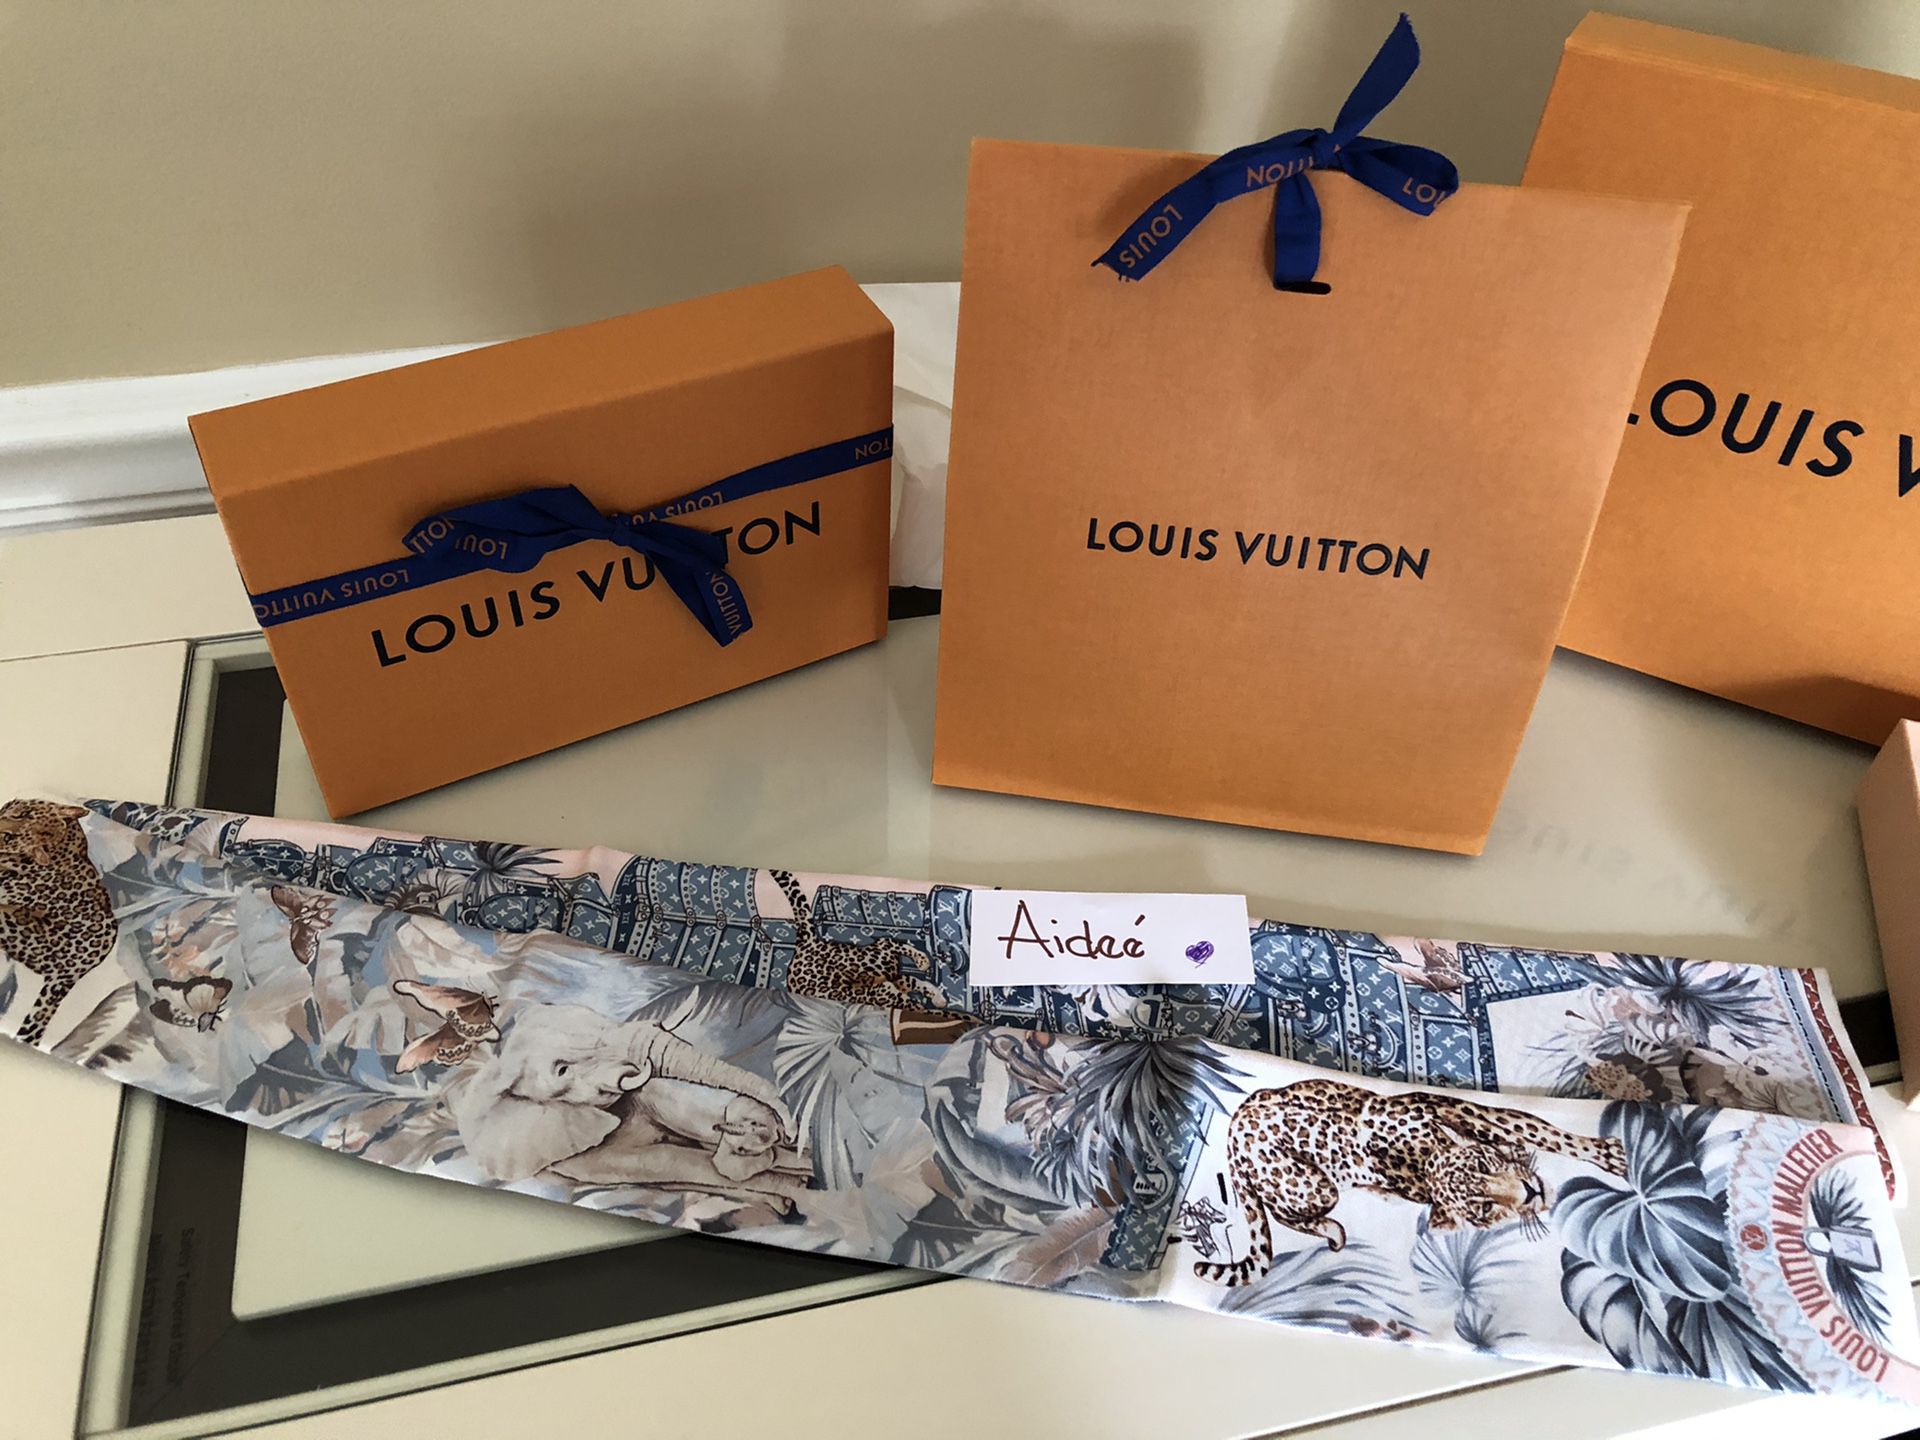 Louis Vuitton voyage extraordinarie bandeau